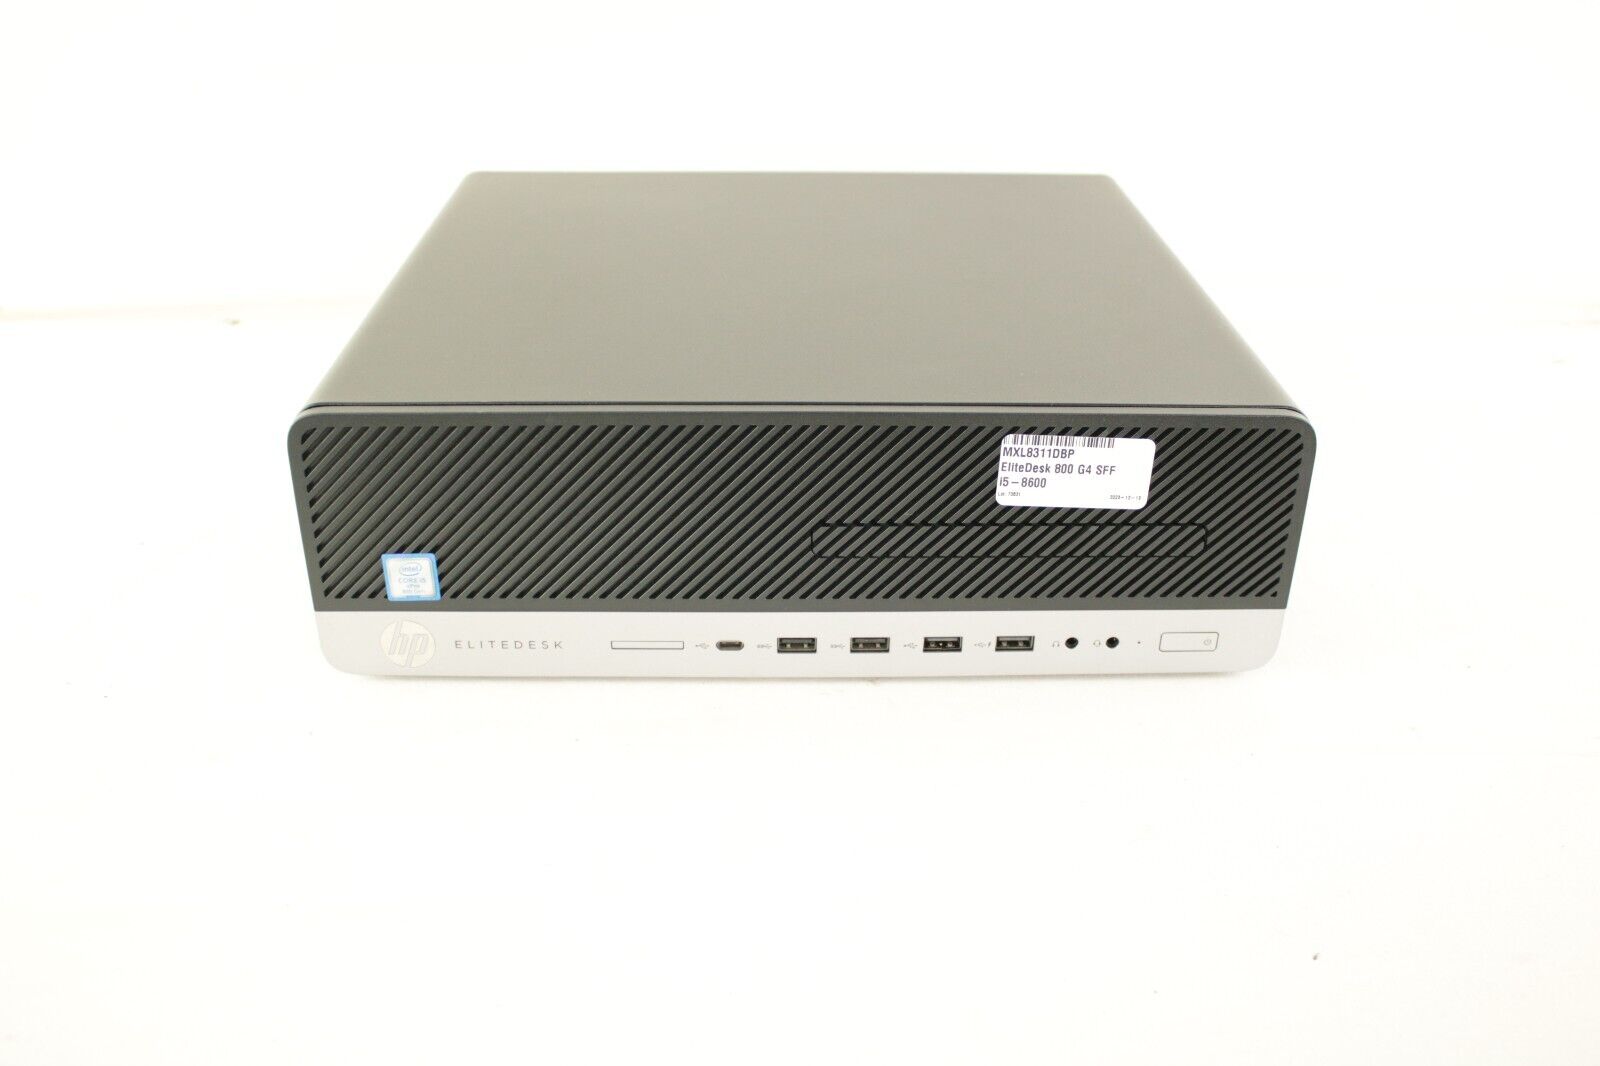 HP EliteDesk 800 G4 SFF w/ Core i5-8600 CPU @3.1GHz 16GB RAM - No HDD/SSD or OS